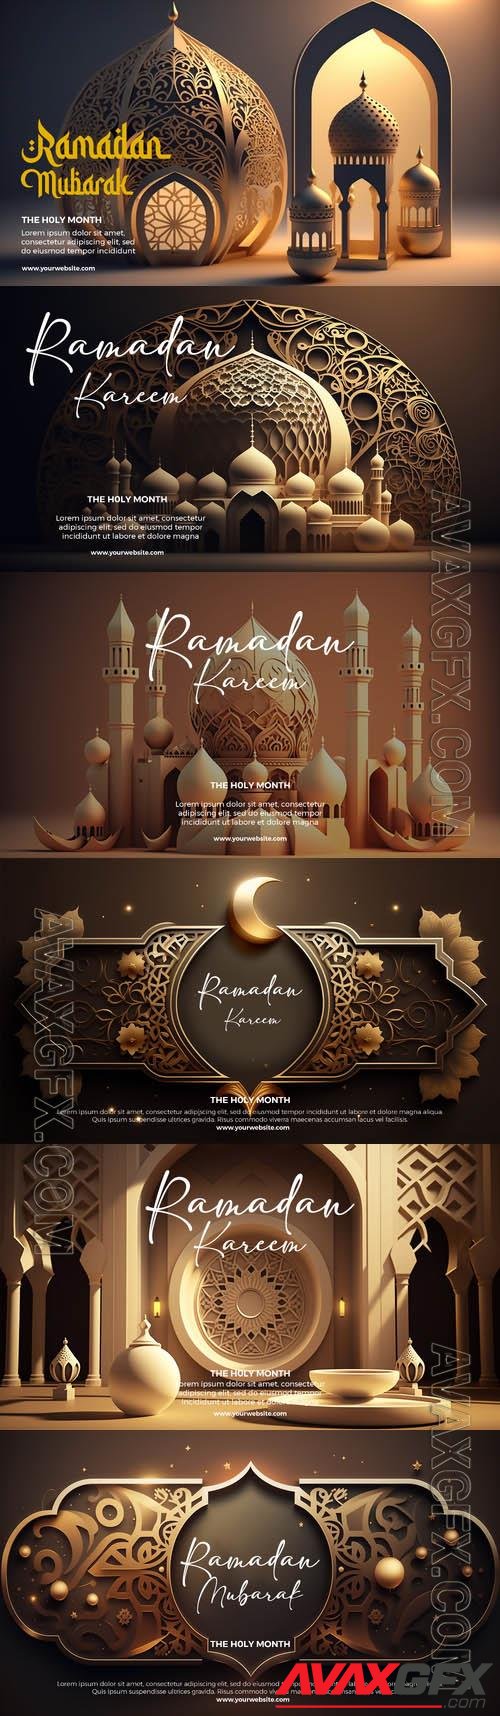 Ramadan kareem psd banner template with 3d render islamic background